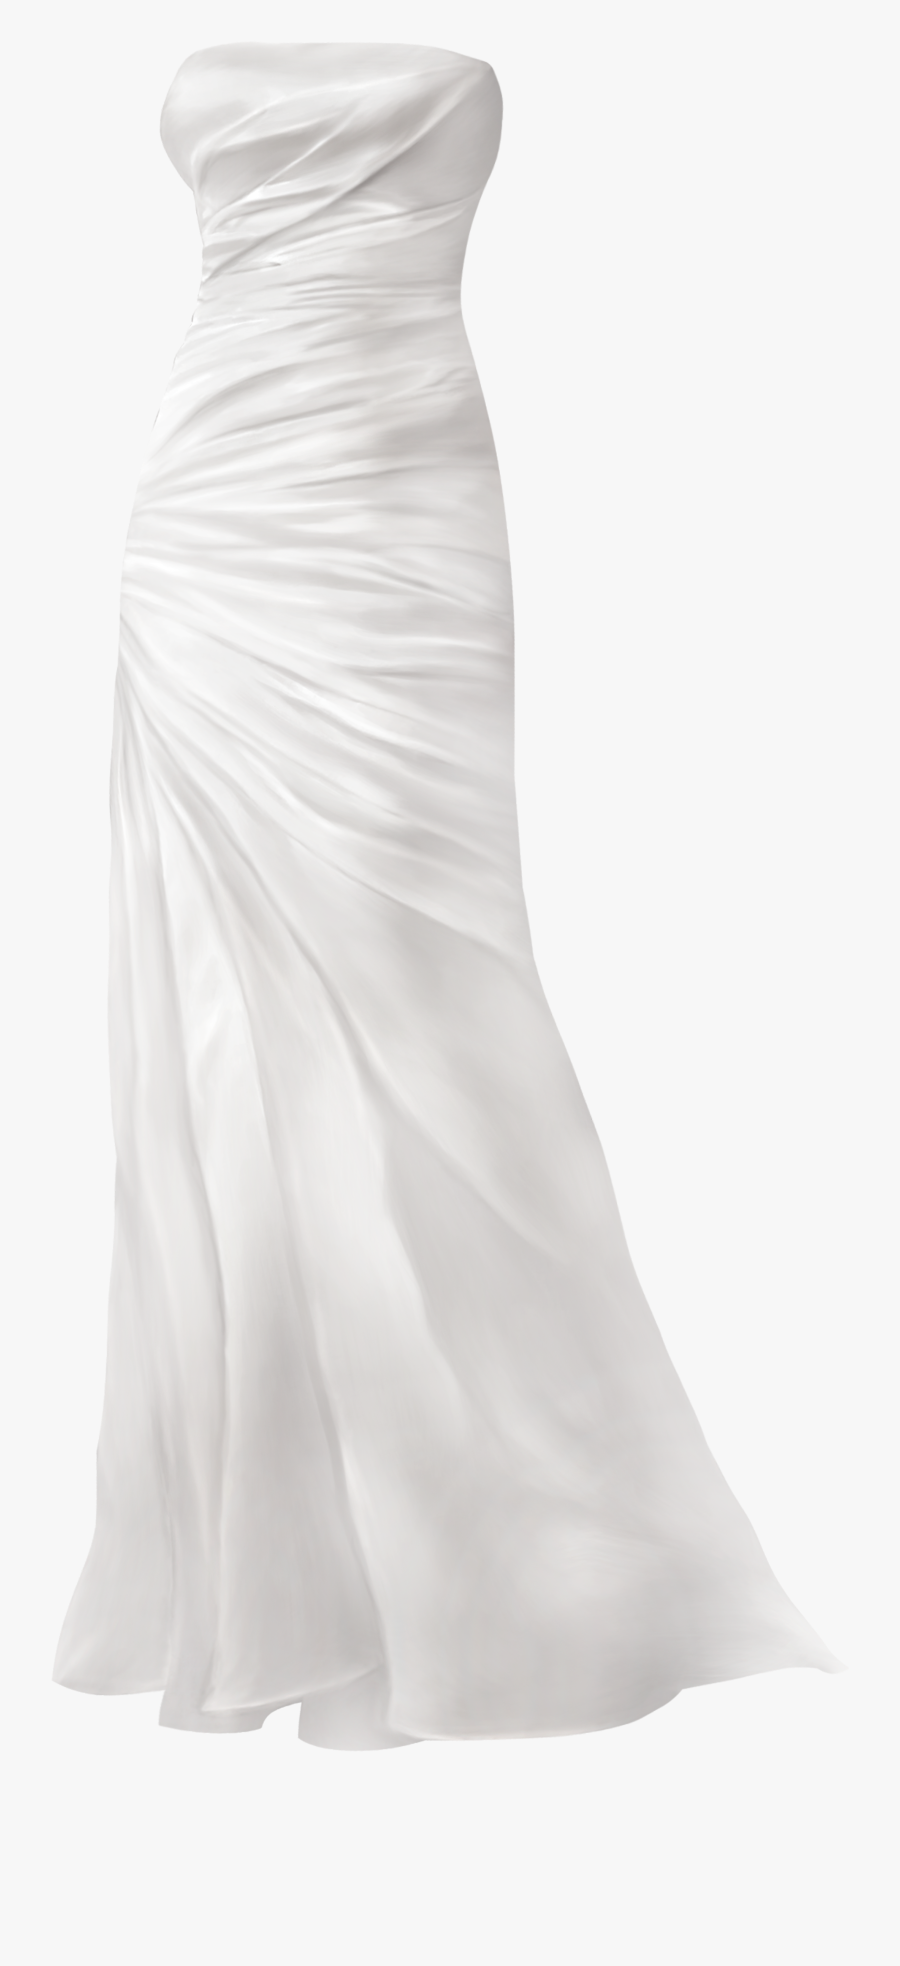 Simple Wedding Dress Png Clip Art, Transparent Clipart